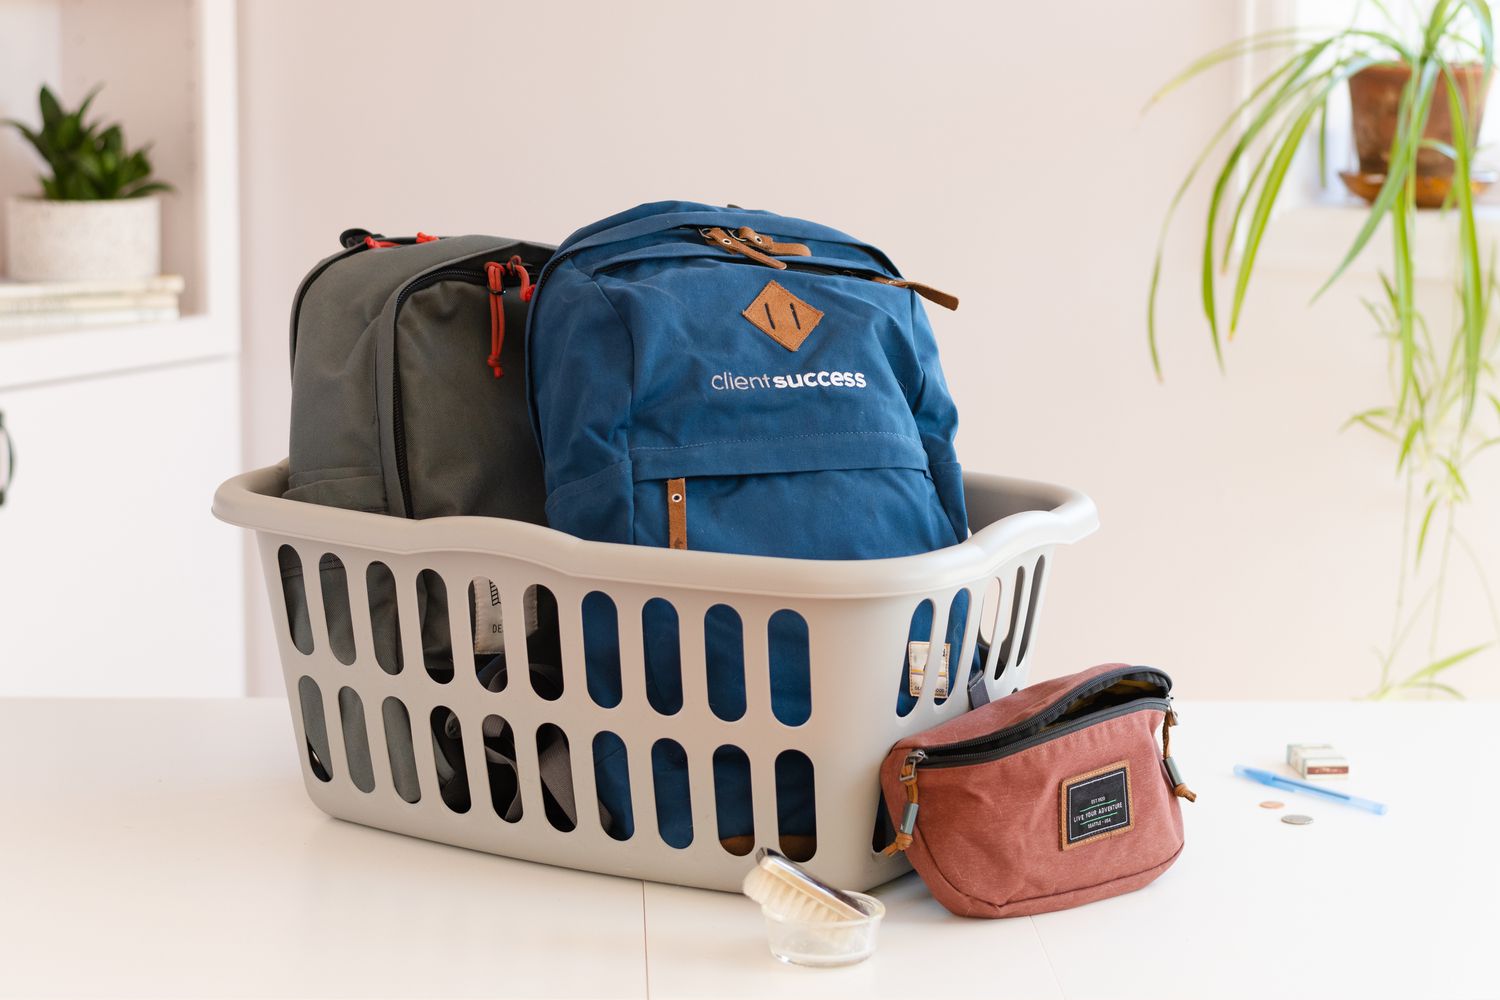 Backpacks inside laundry basket